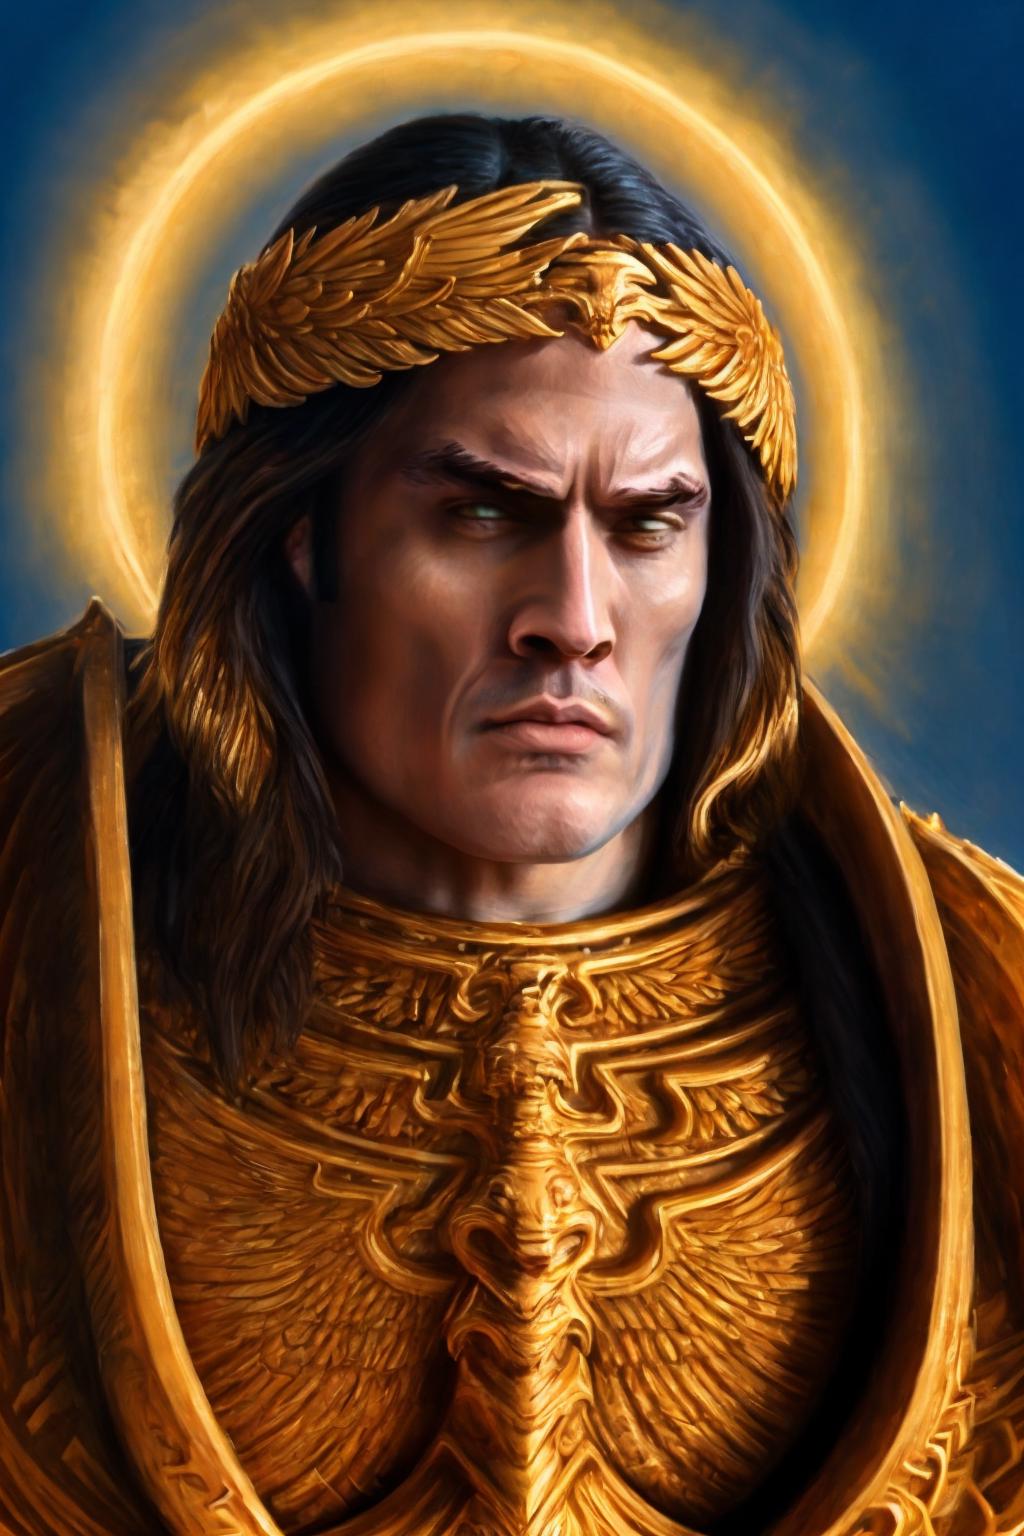 Warhammer 40,000 Emperor of Mankind image by fiddlesandsticks